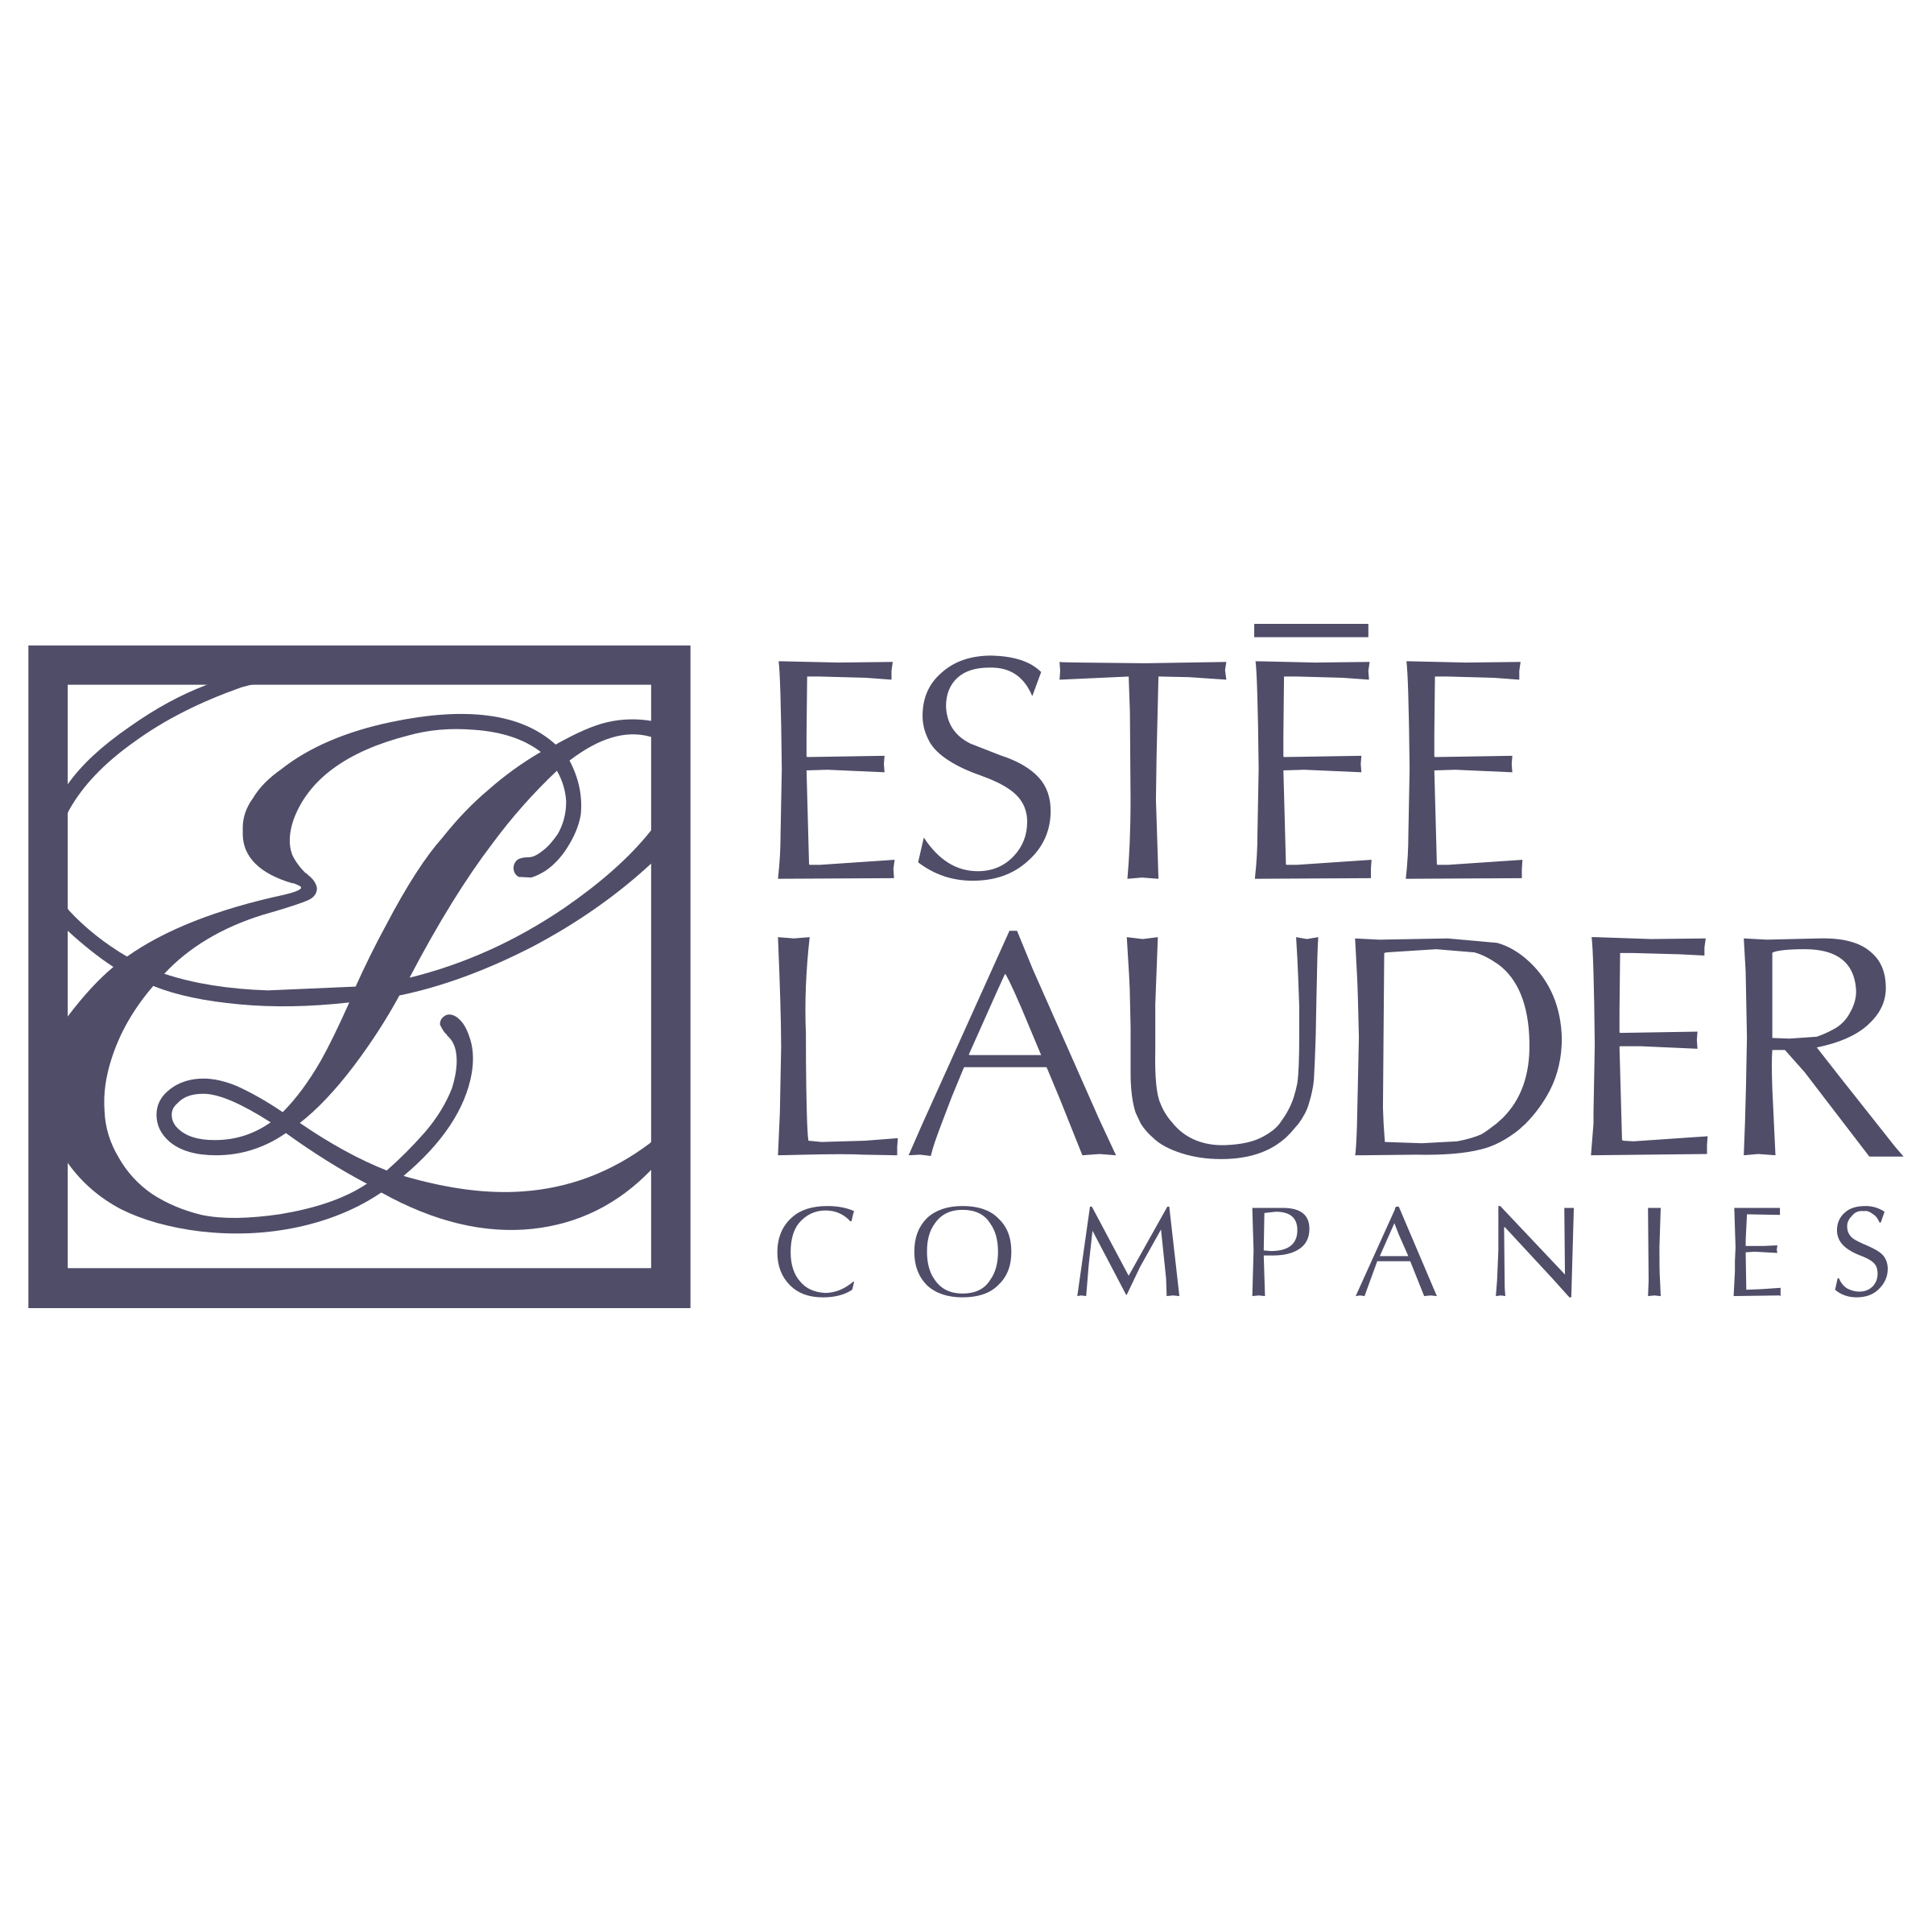 Estee Lauder logo PNG descargar imagen